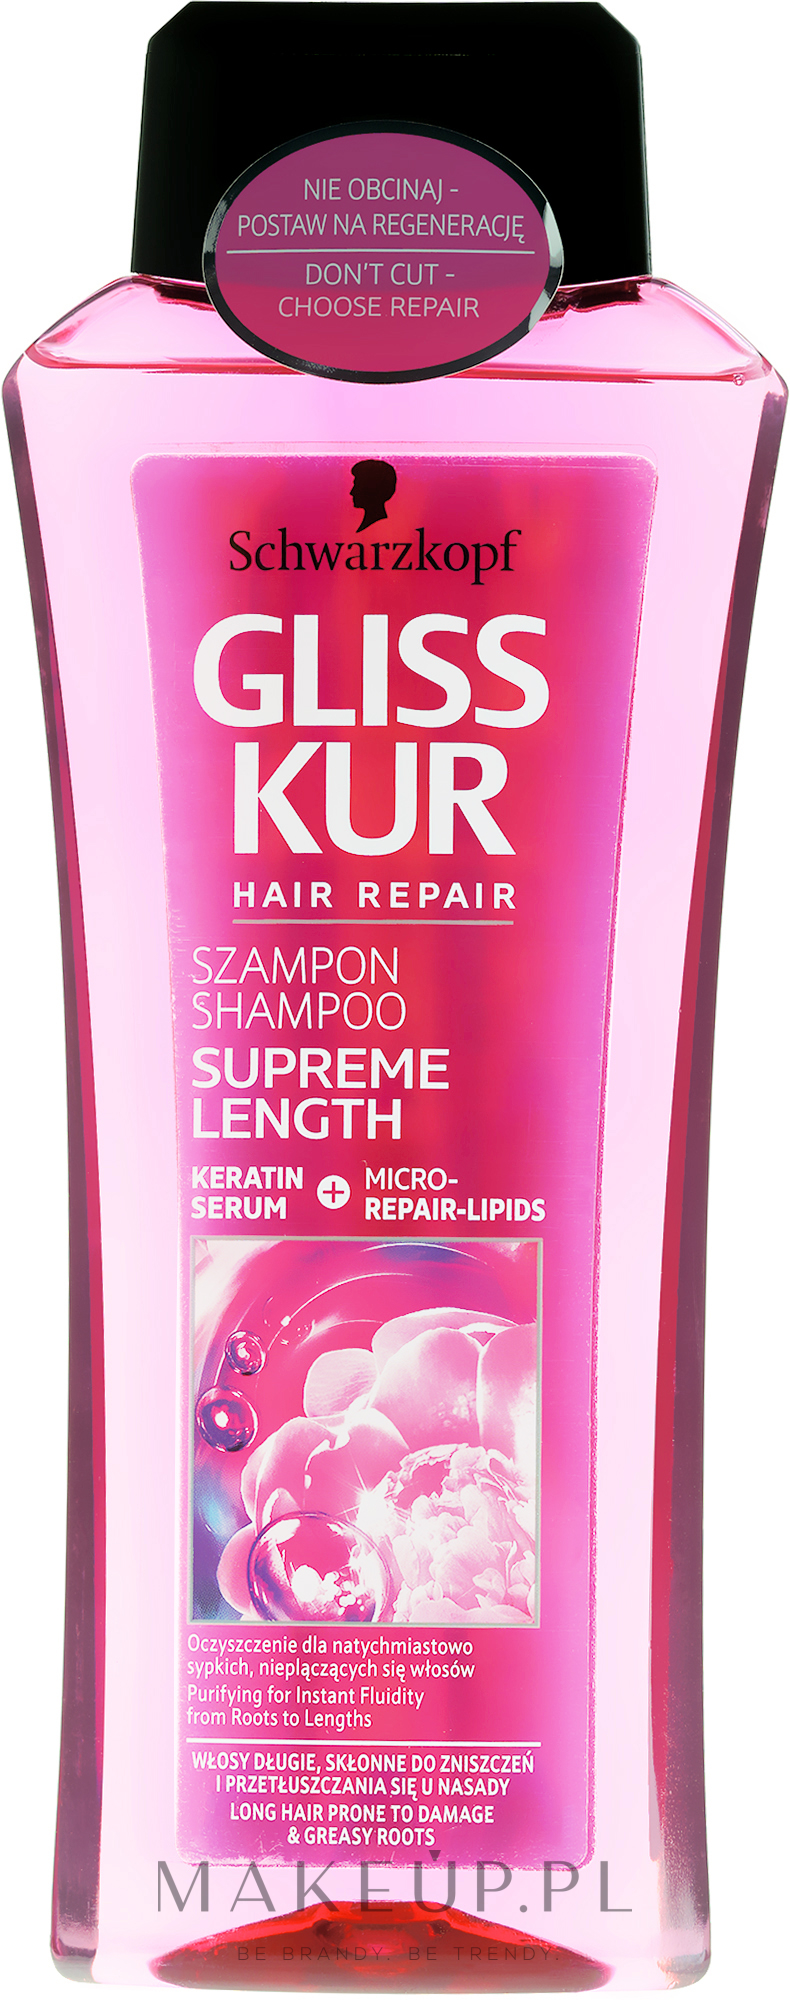 gliss kur szampon supreme length skład